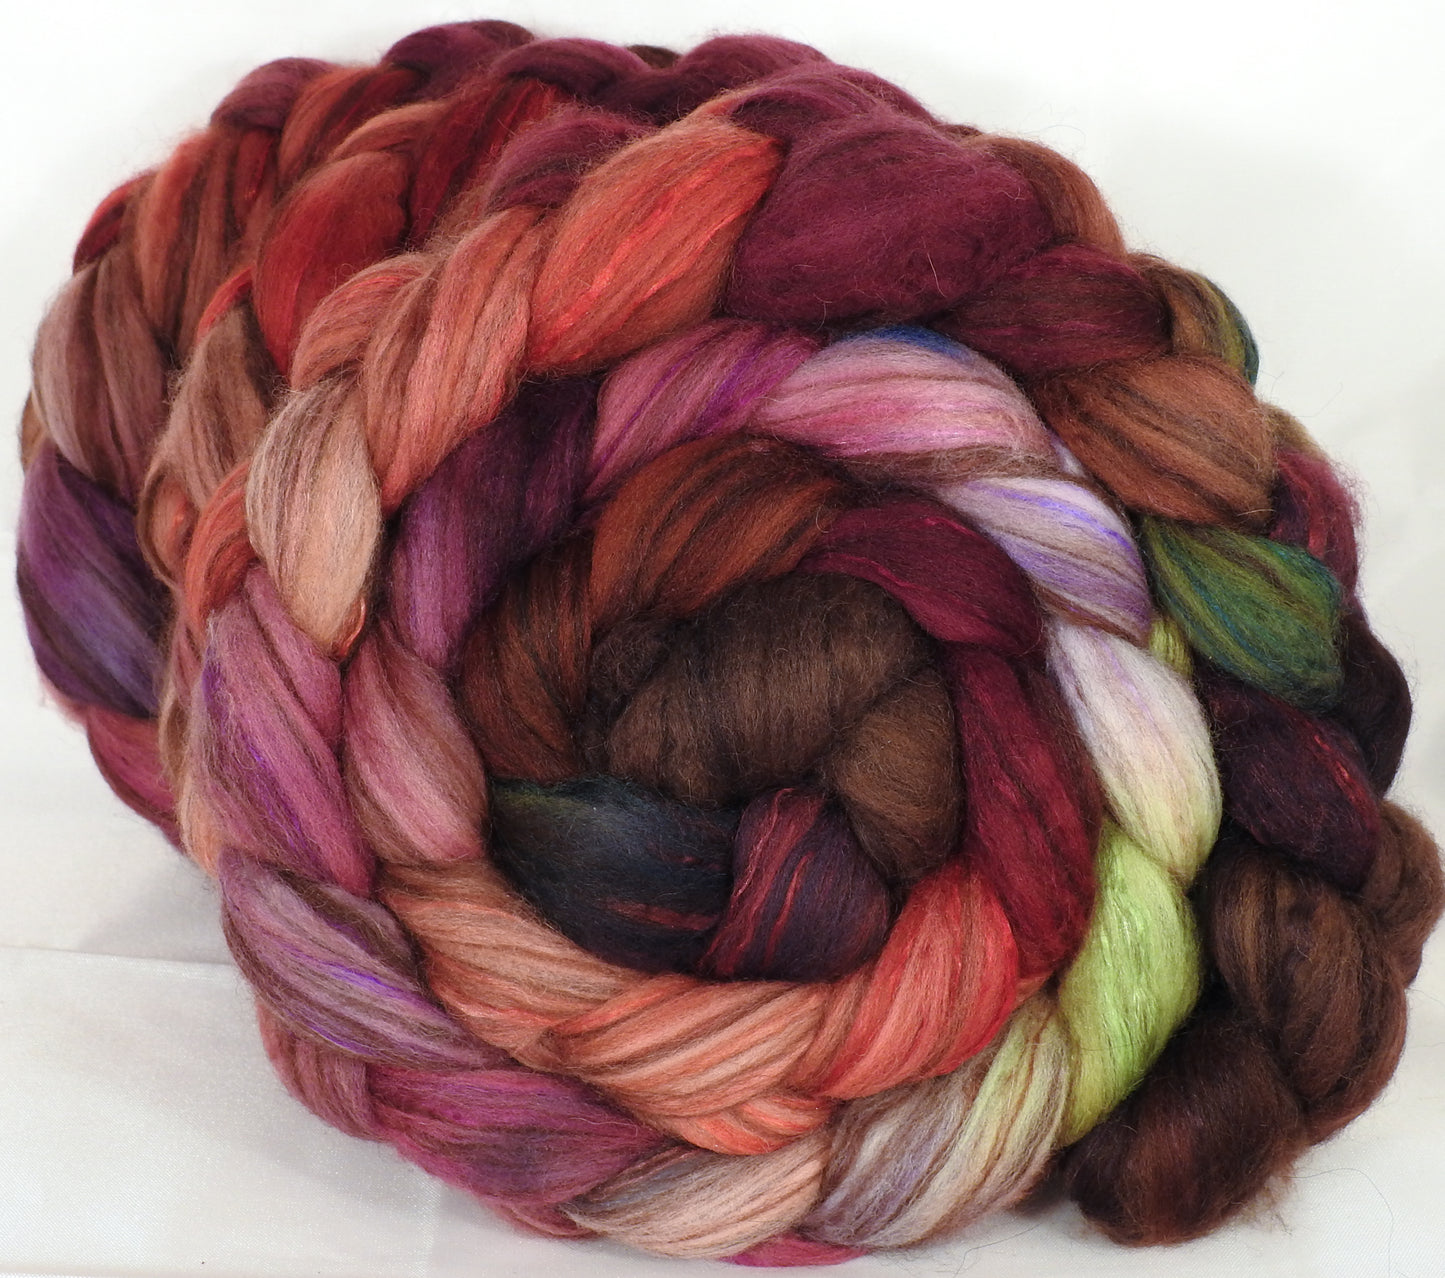 Hand dyed top for spinning - Plum Pudding - 18.5 mic merino/ camel/ brown alpaca/ mulberry silk/ (40/20/20/20) - Inglenook Fibers